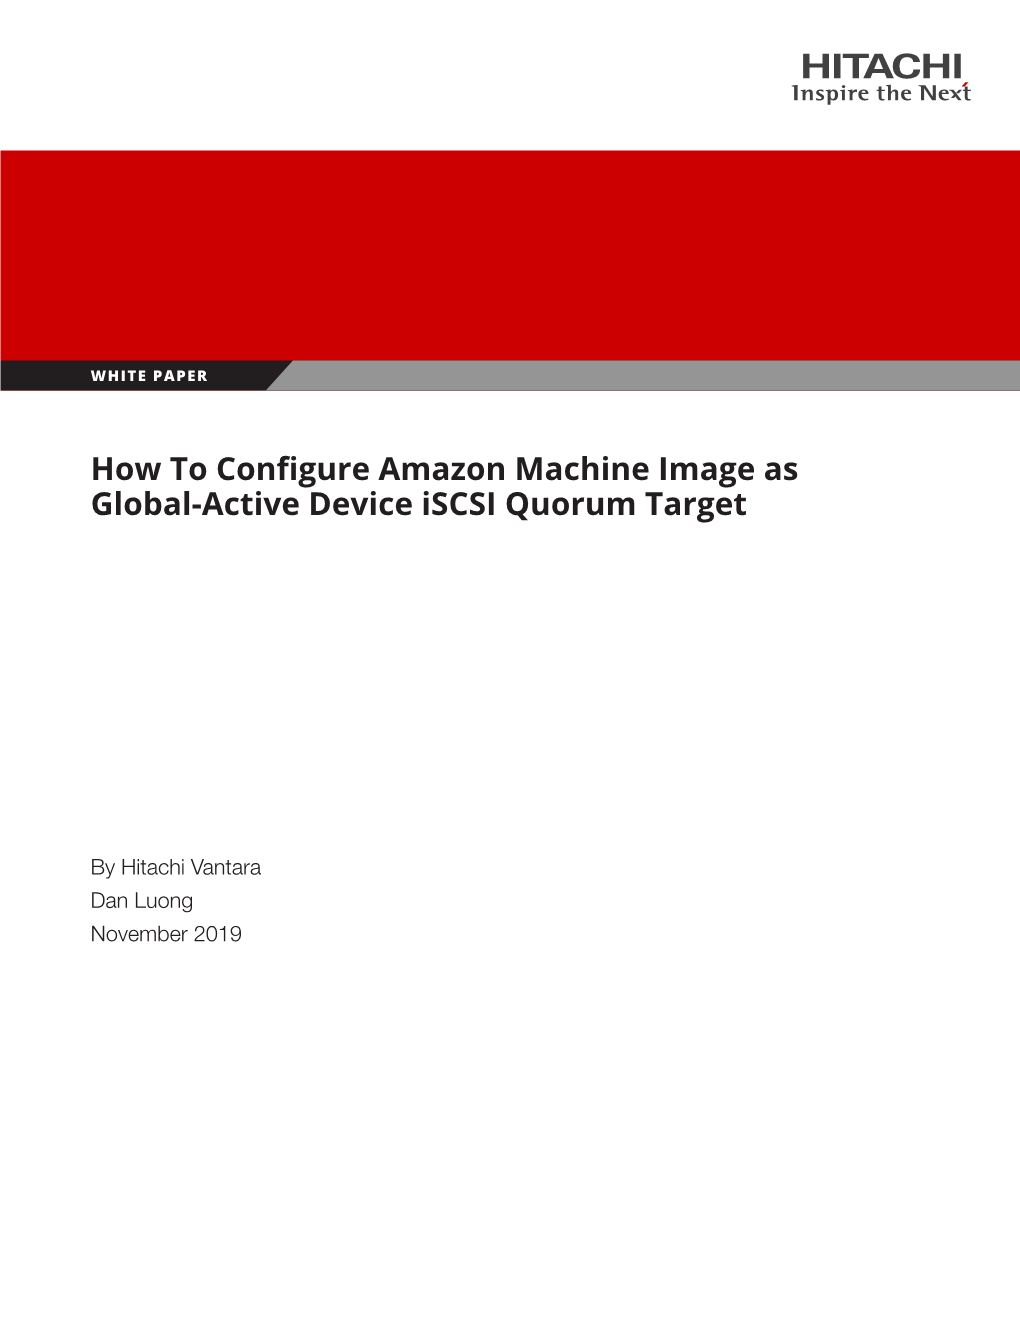 How to Configure Amazon Machine Image As Global-Active Device Iscsi Quorum Target